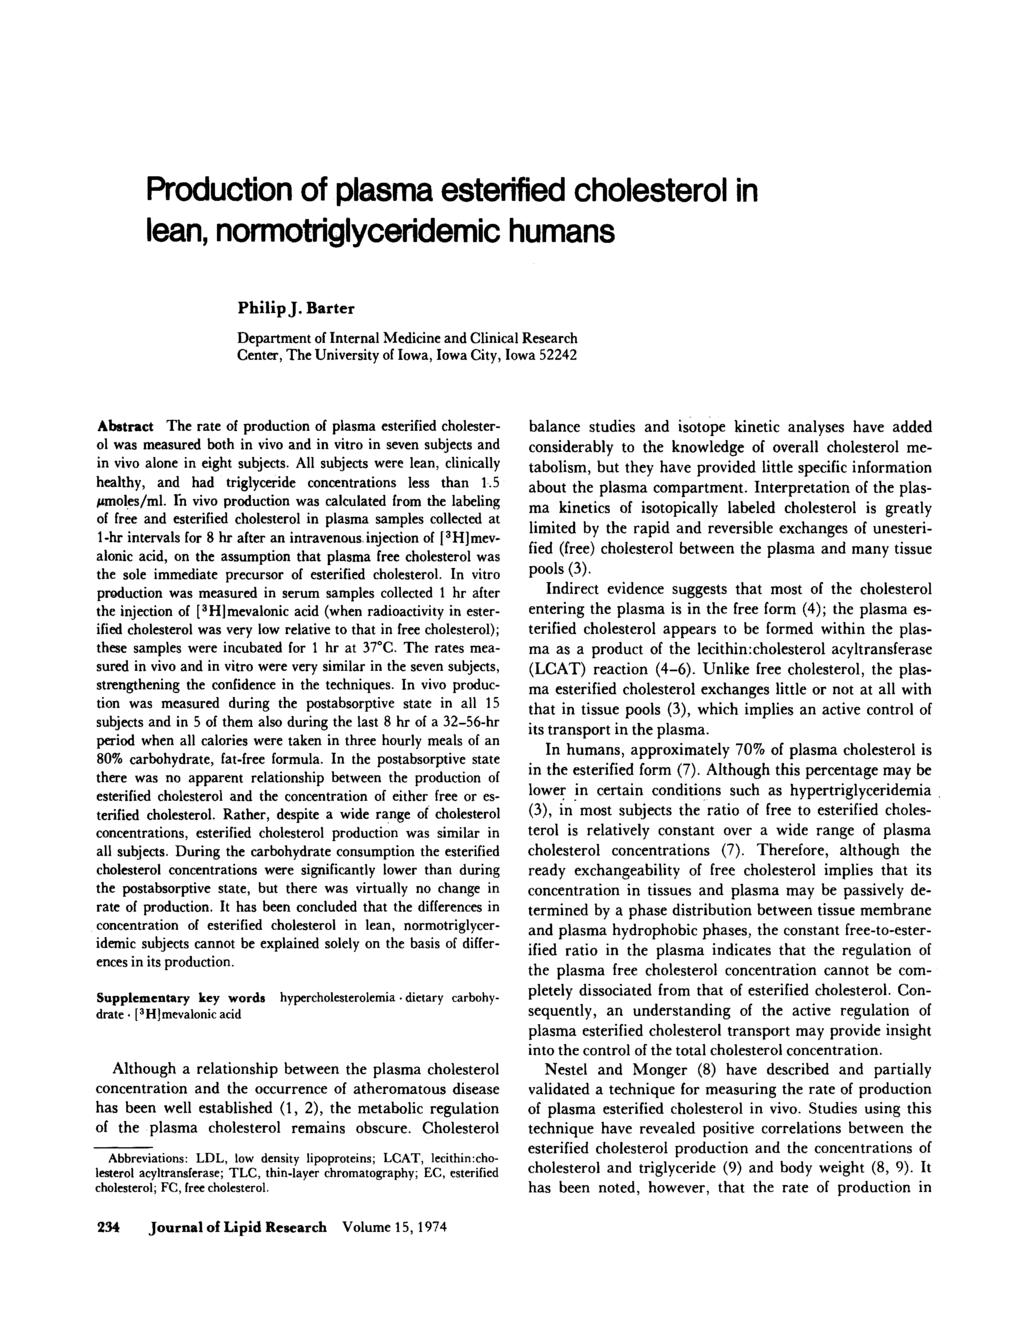 Production of plasma esterified cholesterol in lean, normotriglyceridemic humans Philip J.